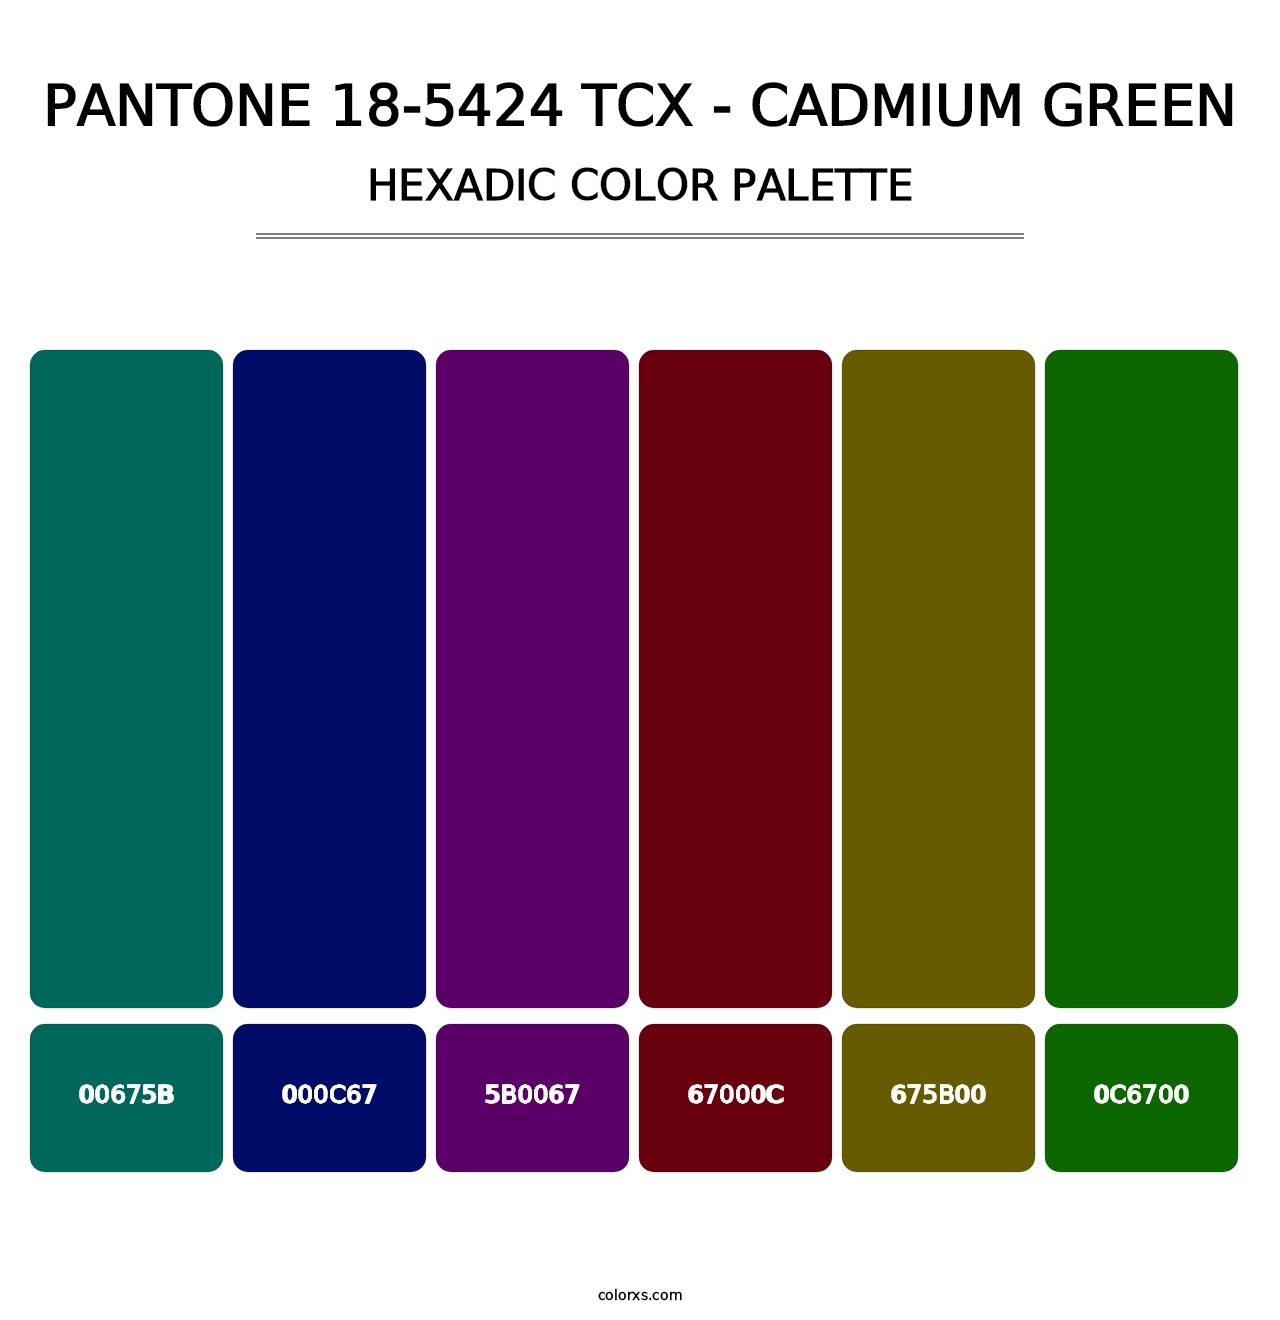 PANTONE 18-5424 TCX - Cadmium Green - Hexadic Color Palette